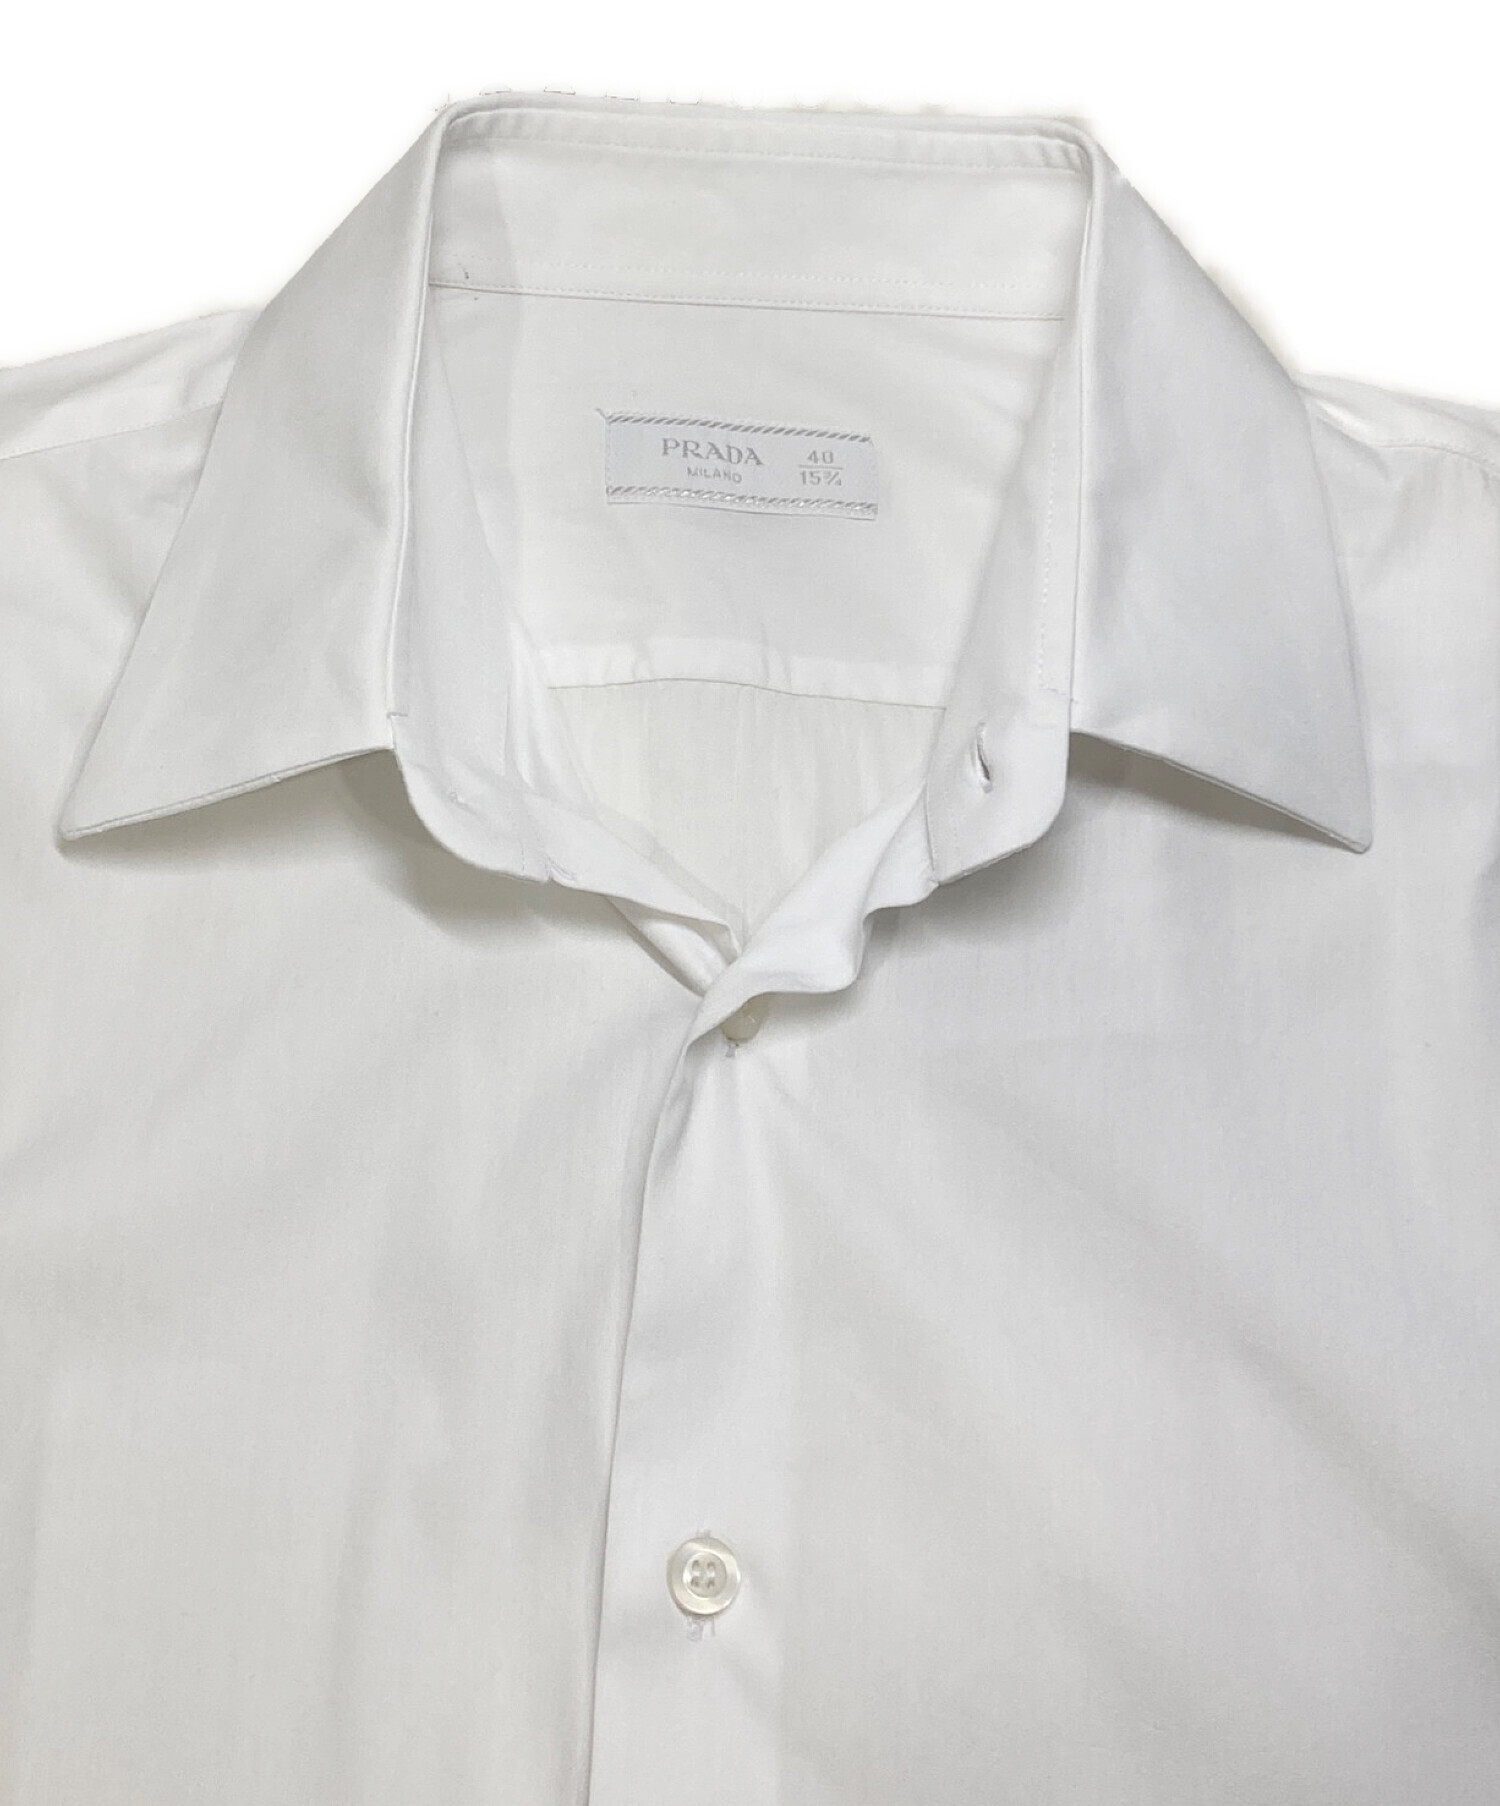 PRADA (プラダ) ドレスシャツ ホワイト サイズ:40